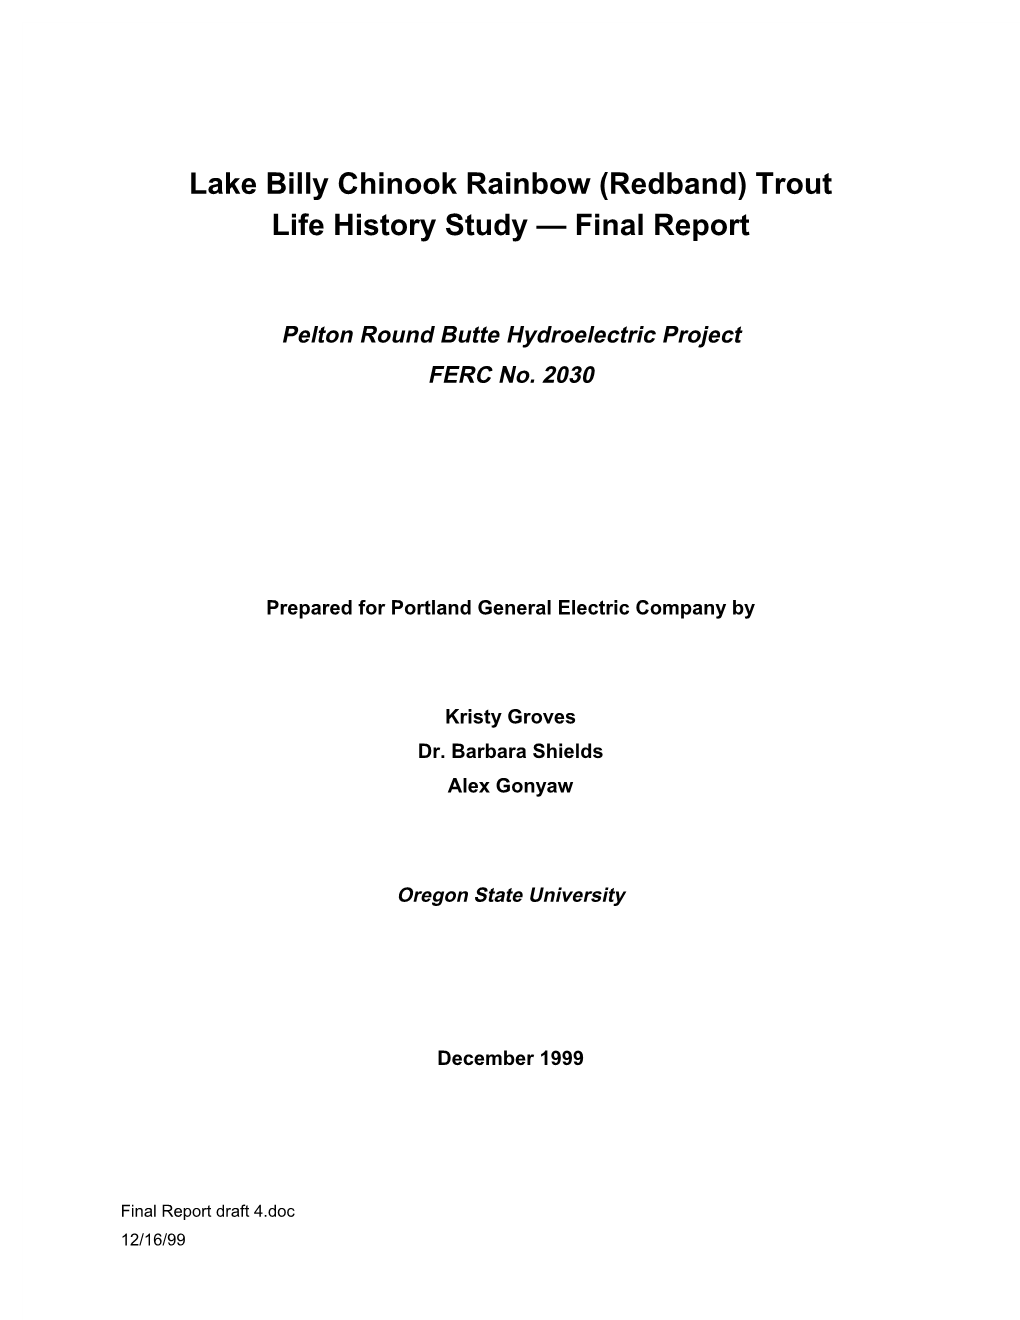 Lake Billy Chinook Rainbow (Redband) Trout Life History Study — Final Report